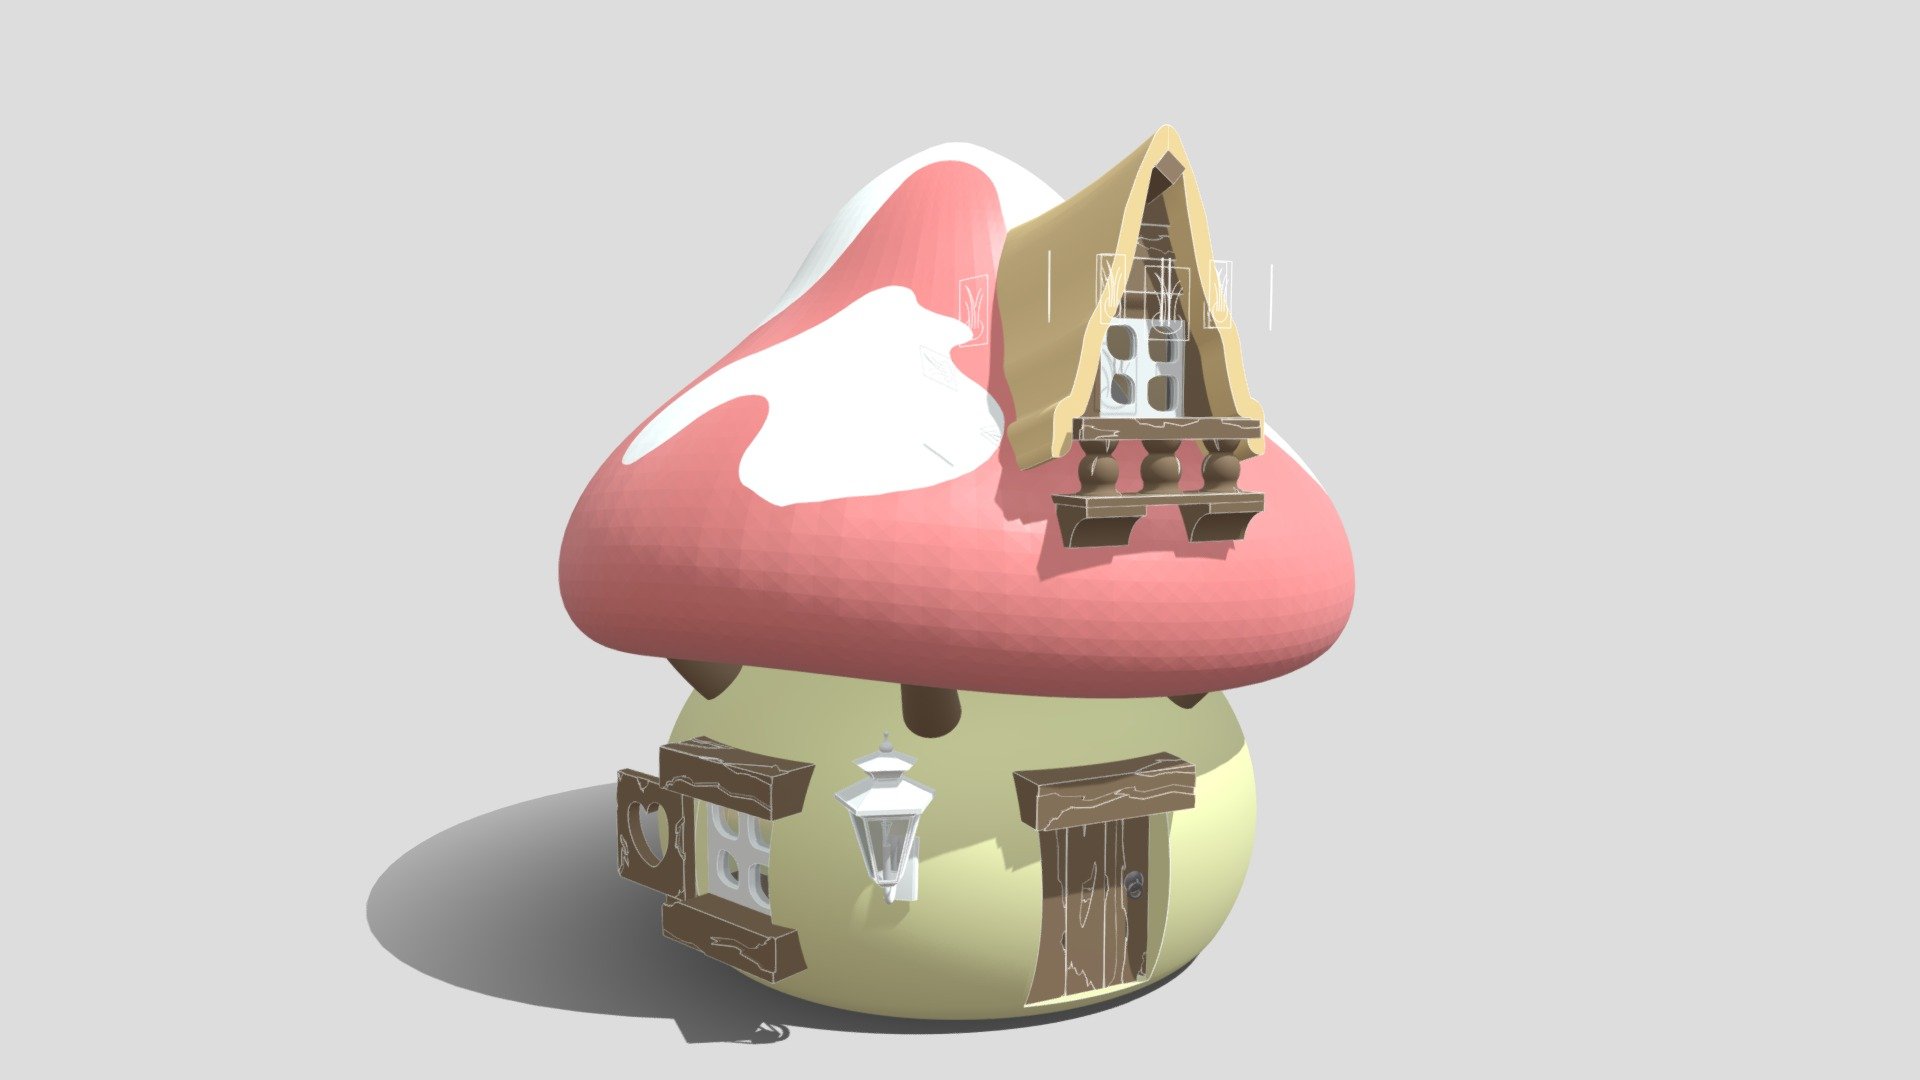 Smurf's cottage made of mushroom made in SketchUp Pro 2021 3d model